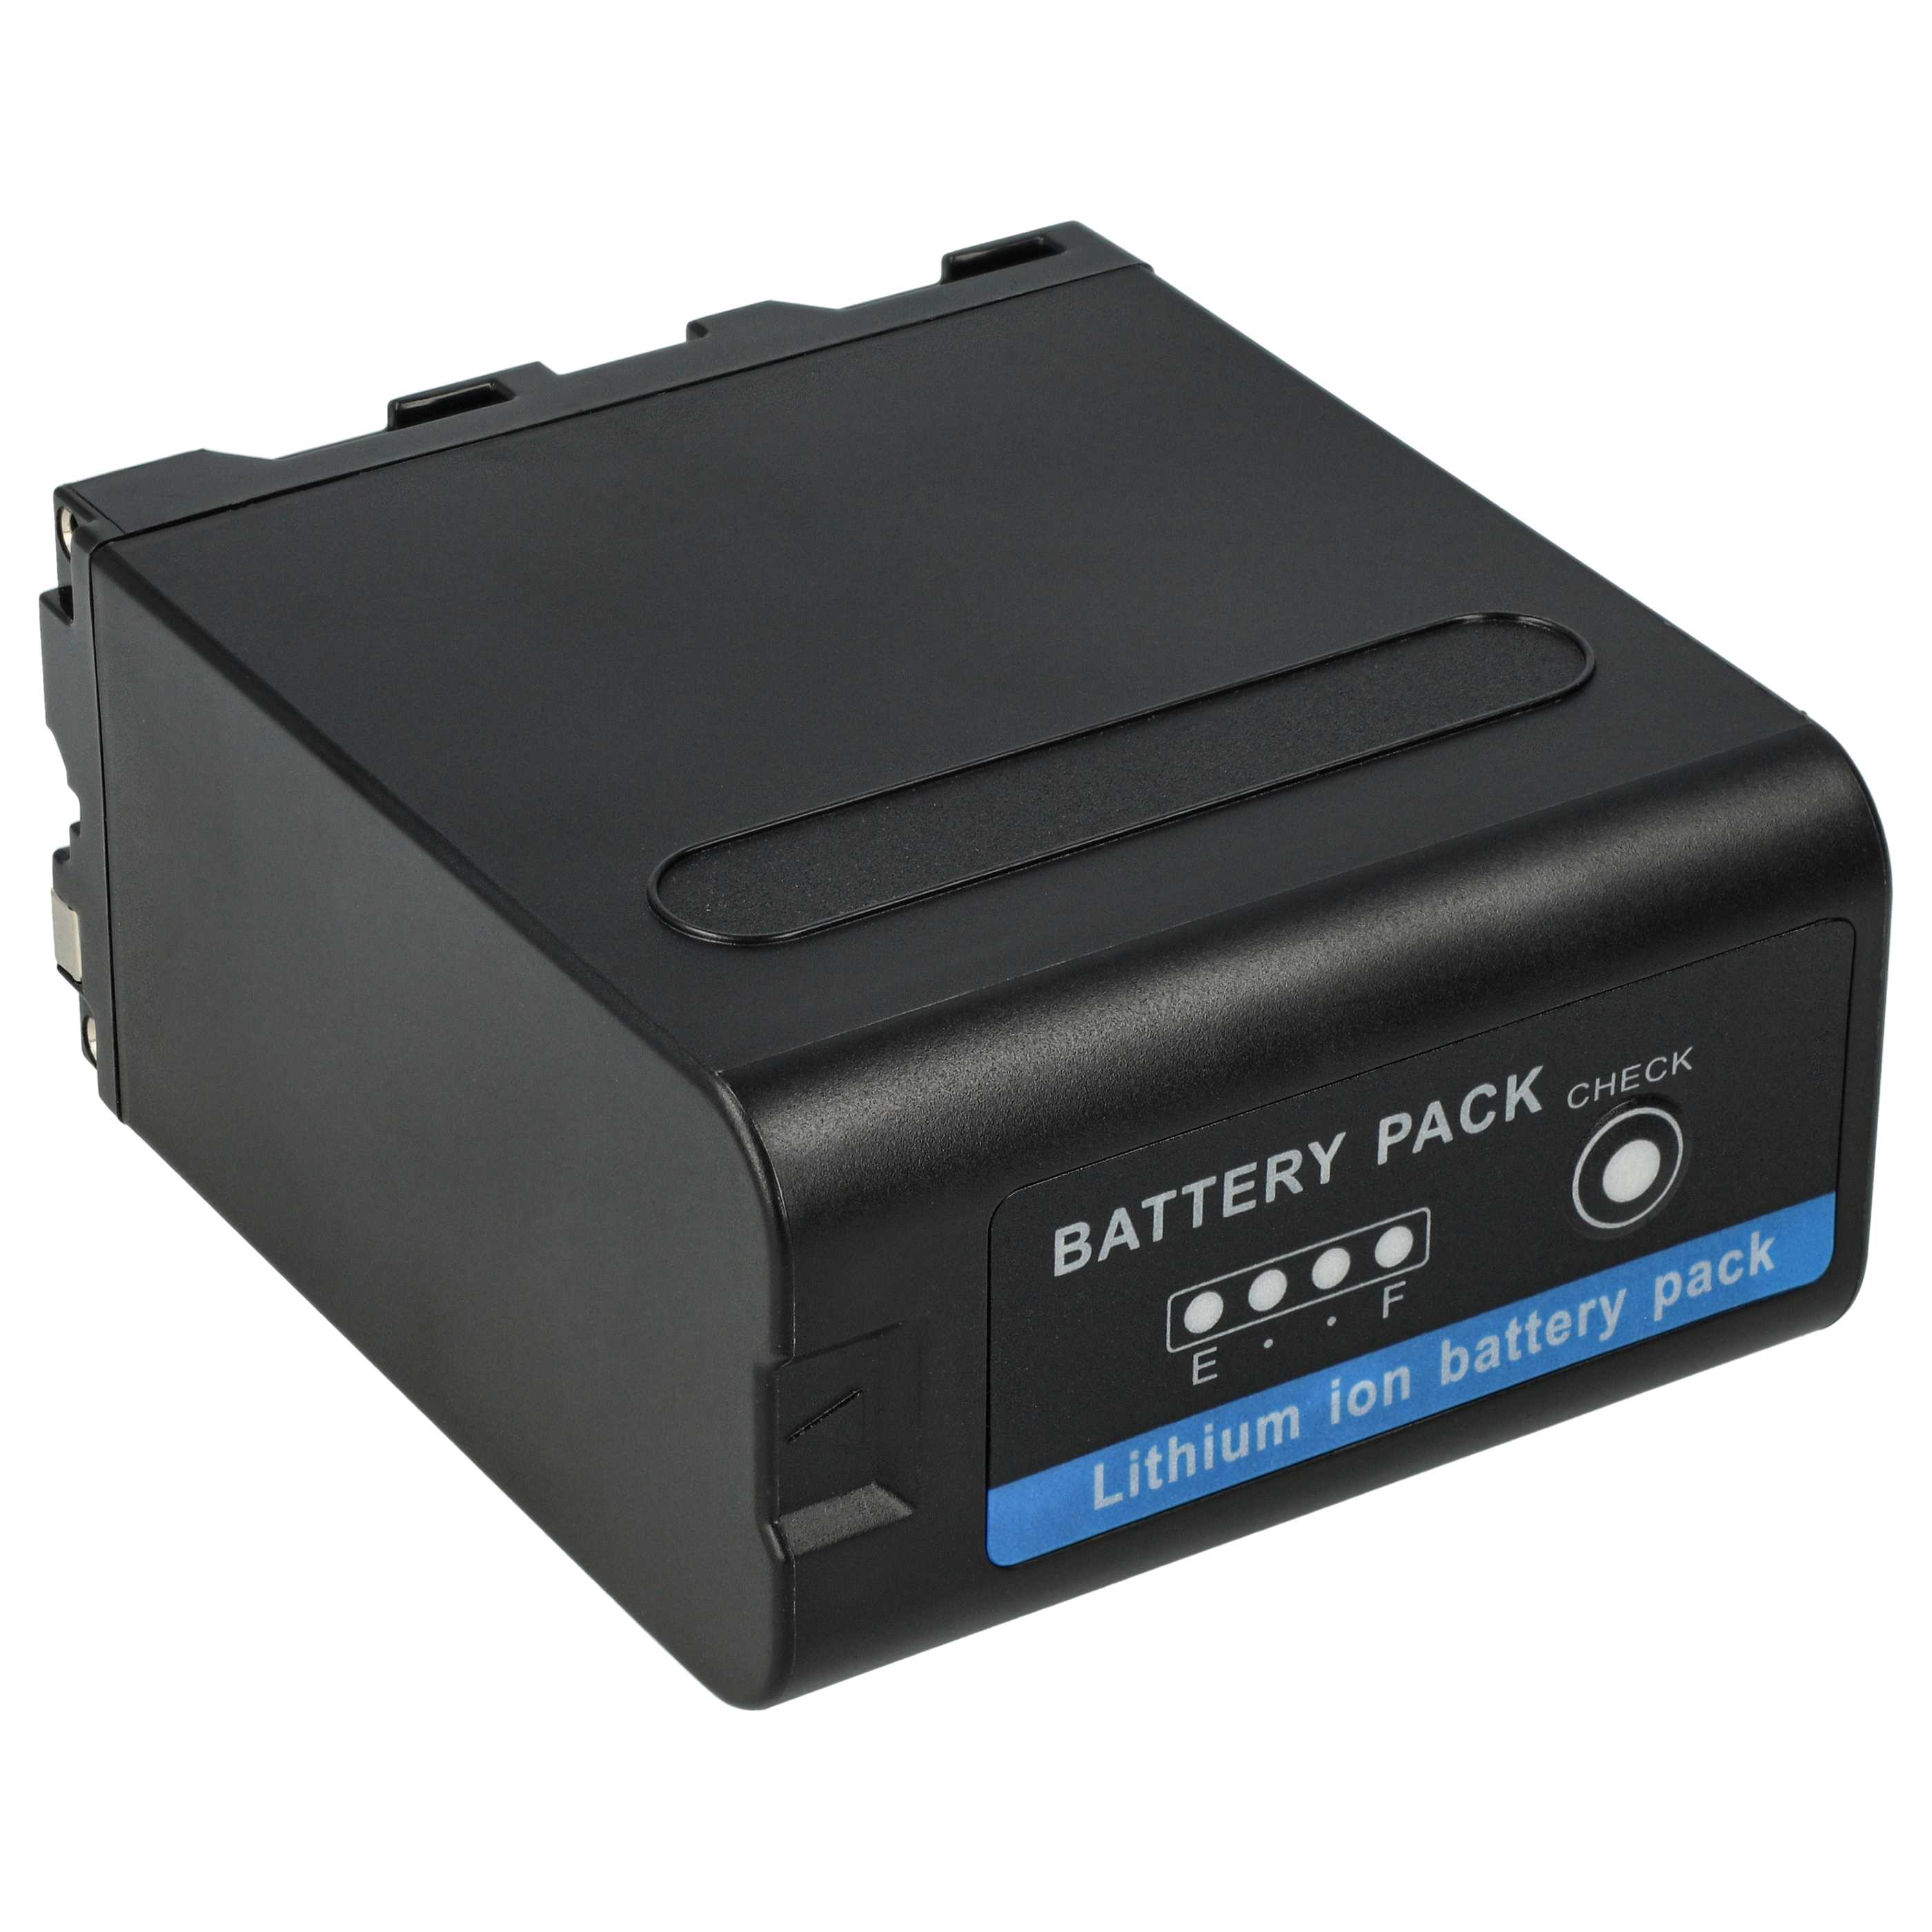 Akumulator do kamery cyfrowej / wideo zamiennik Sony NP-F930, NP-F960, NP-F950 - 10400 mAh 7,4 V Li-Ion